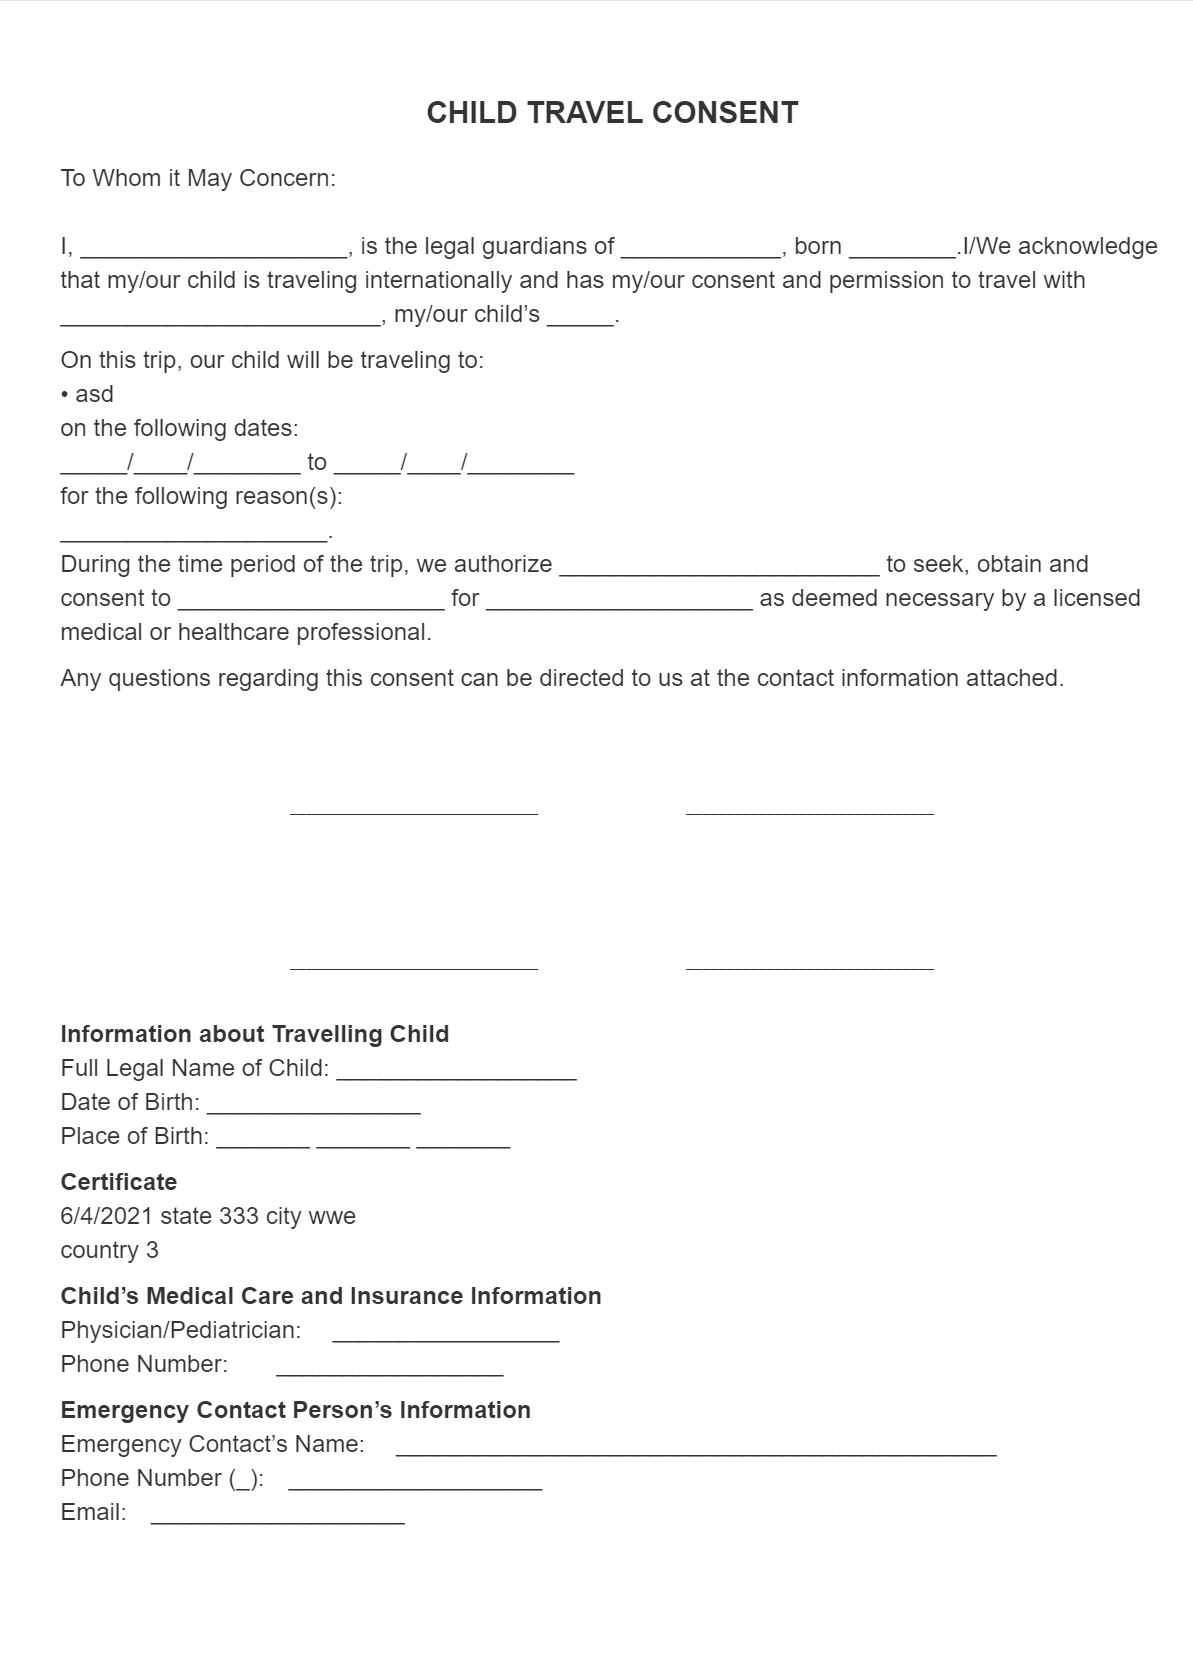 child travel consent form template pdf